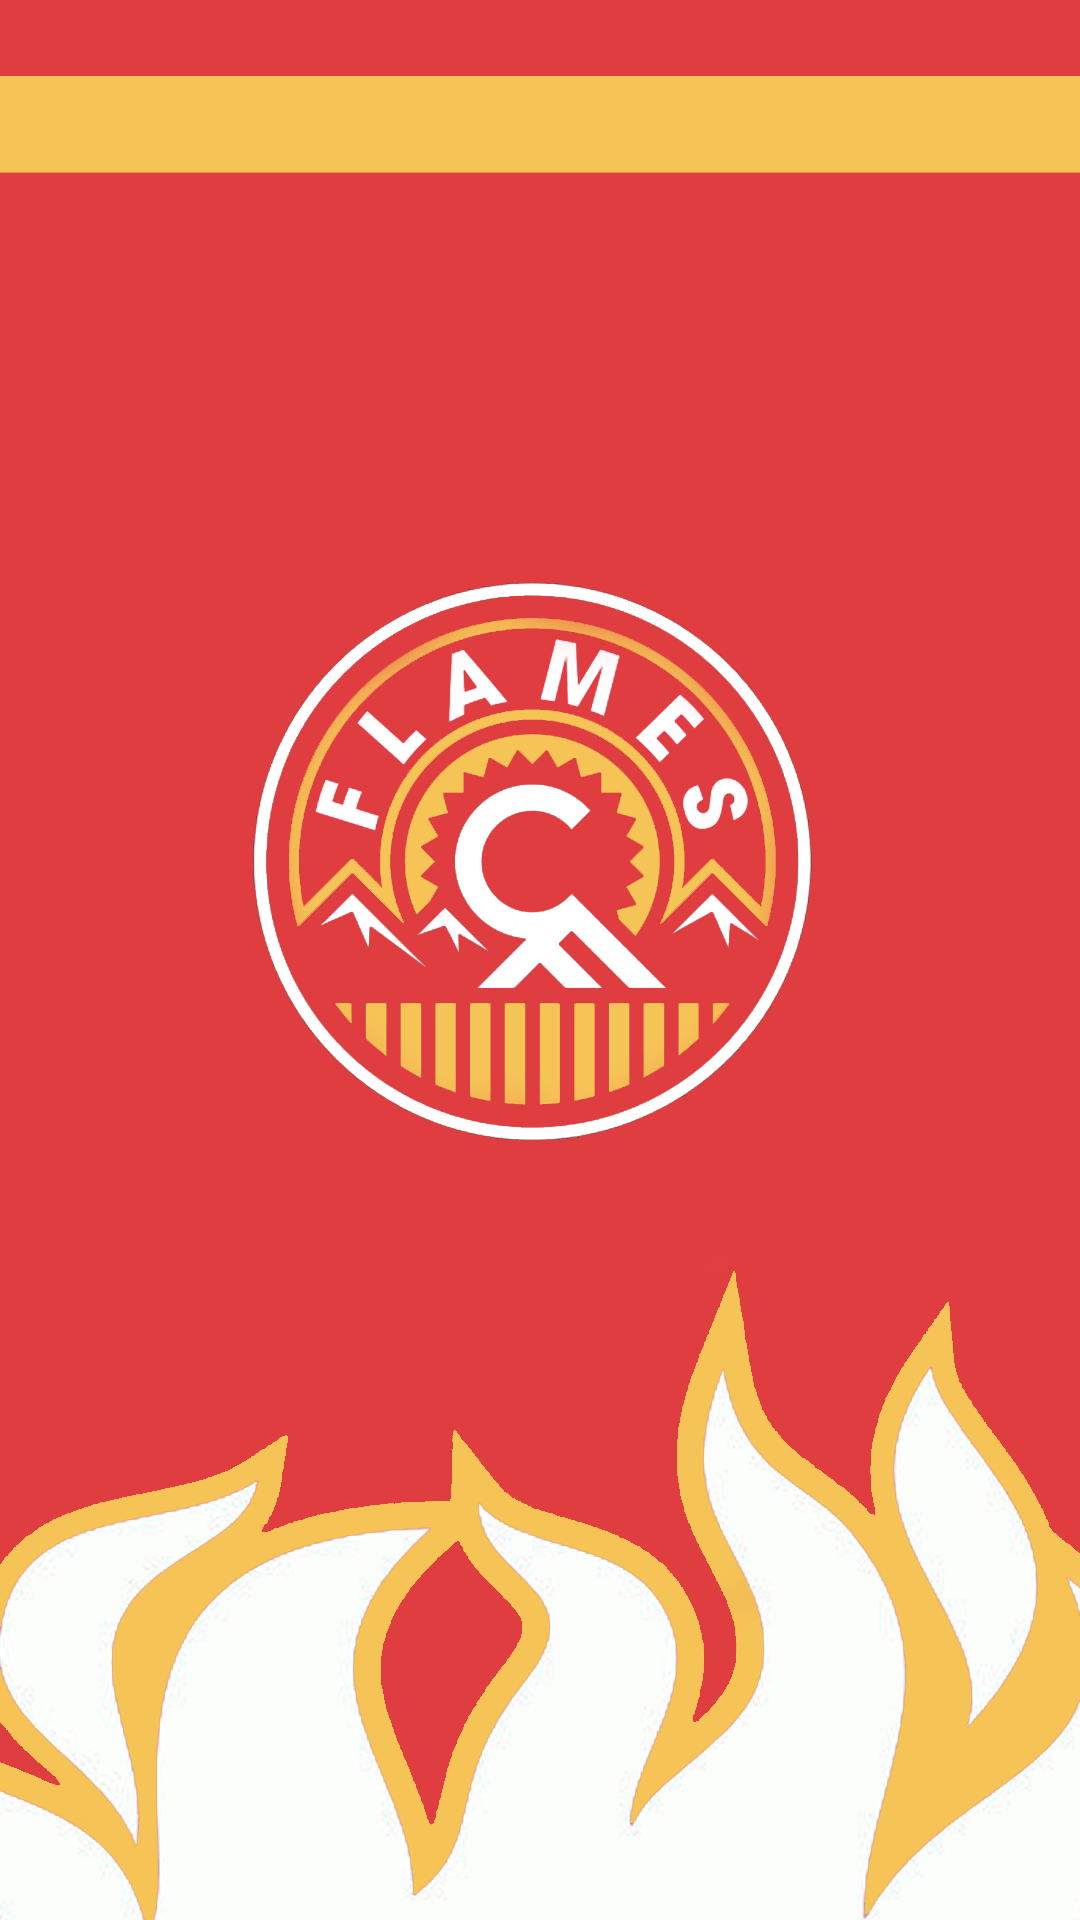 Calgary Flames Wallpaper, Creative Calgary Flames Wallpaper